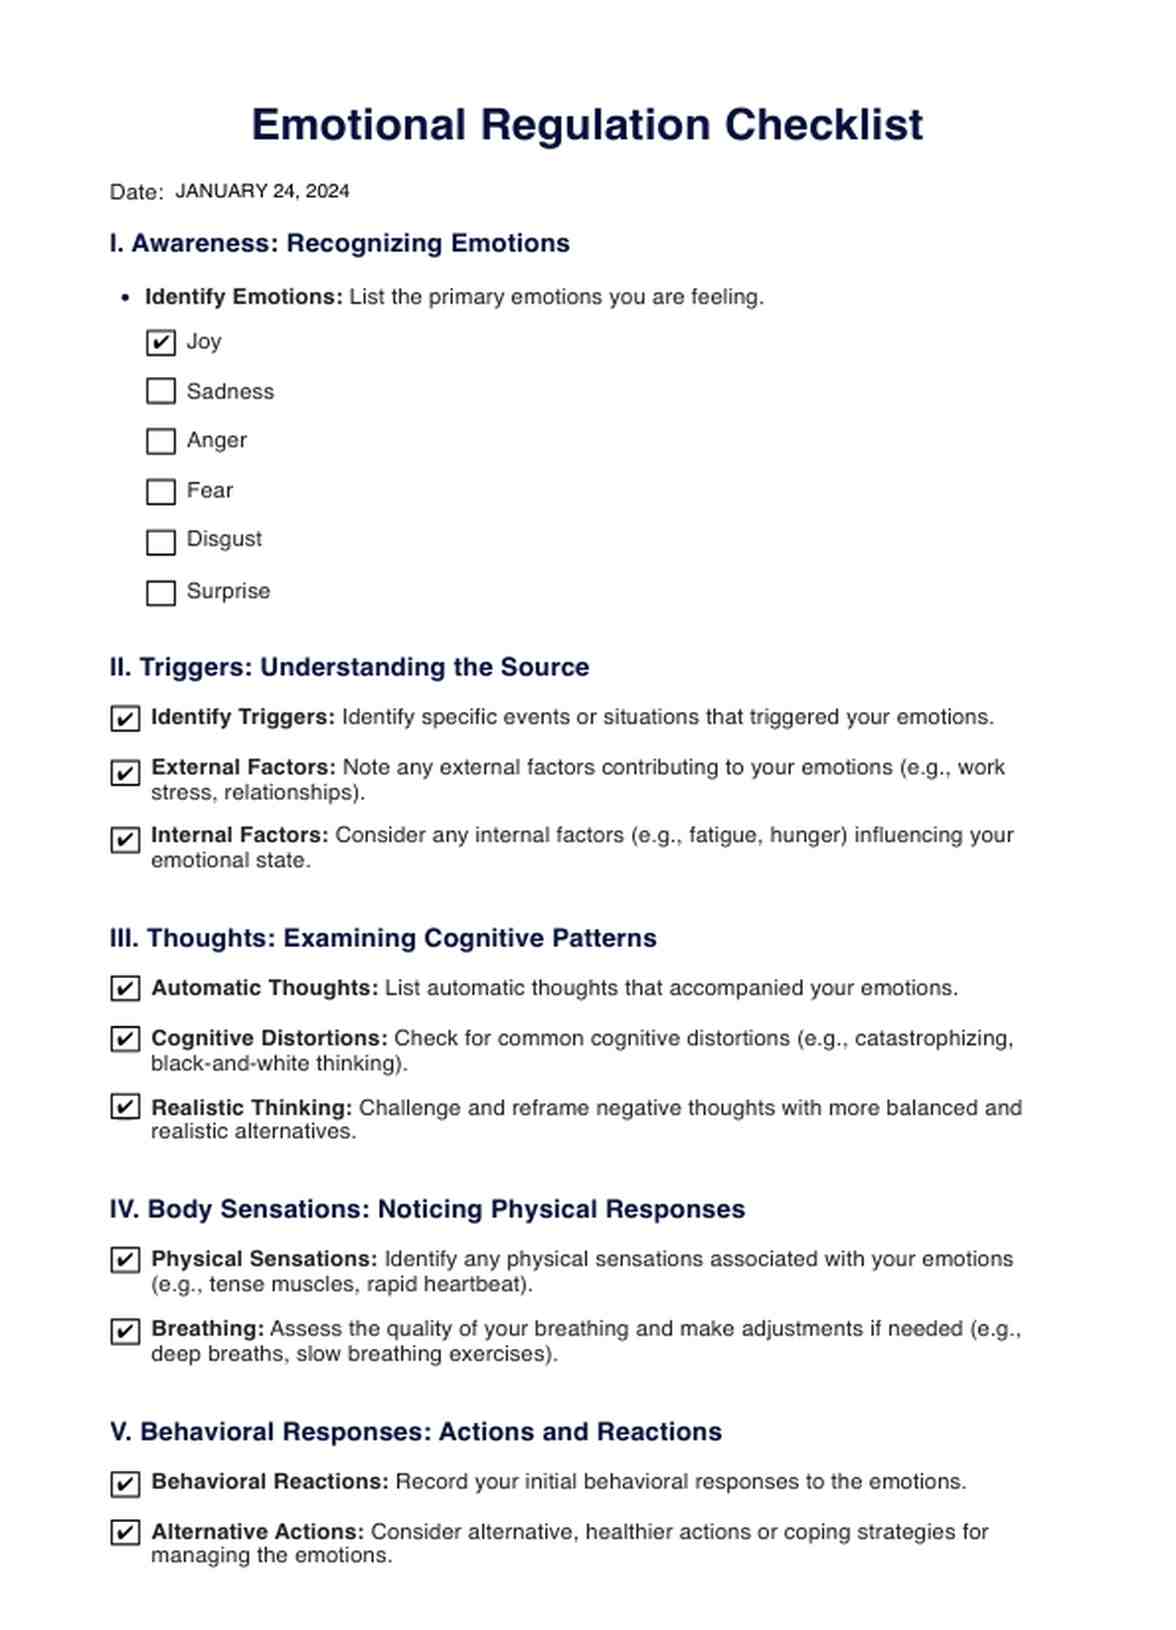 Emotion Regulation Checklist PDF Example